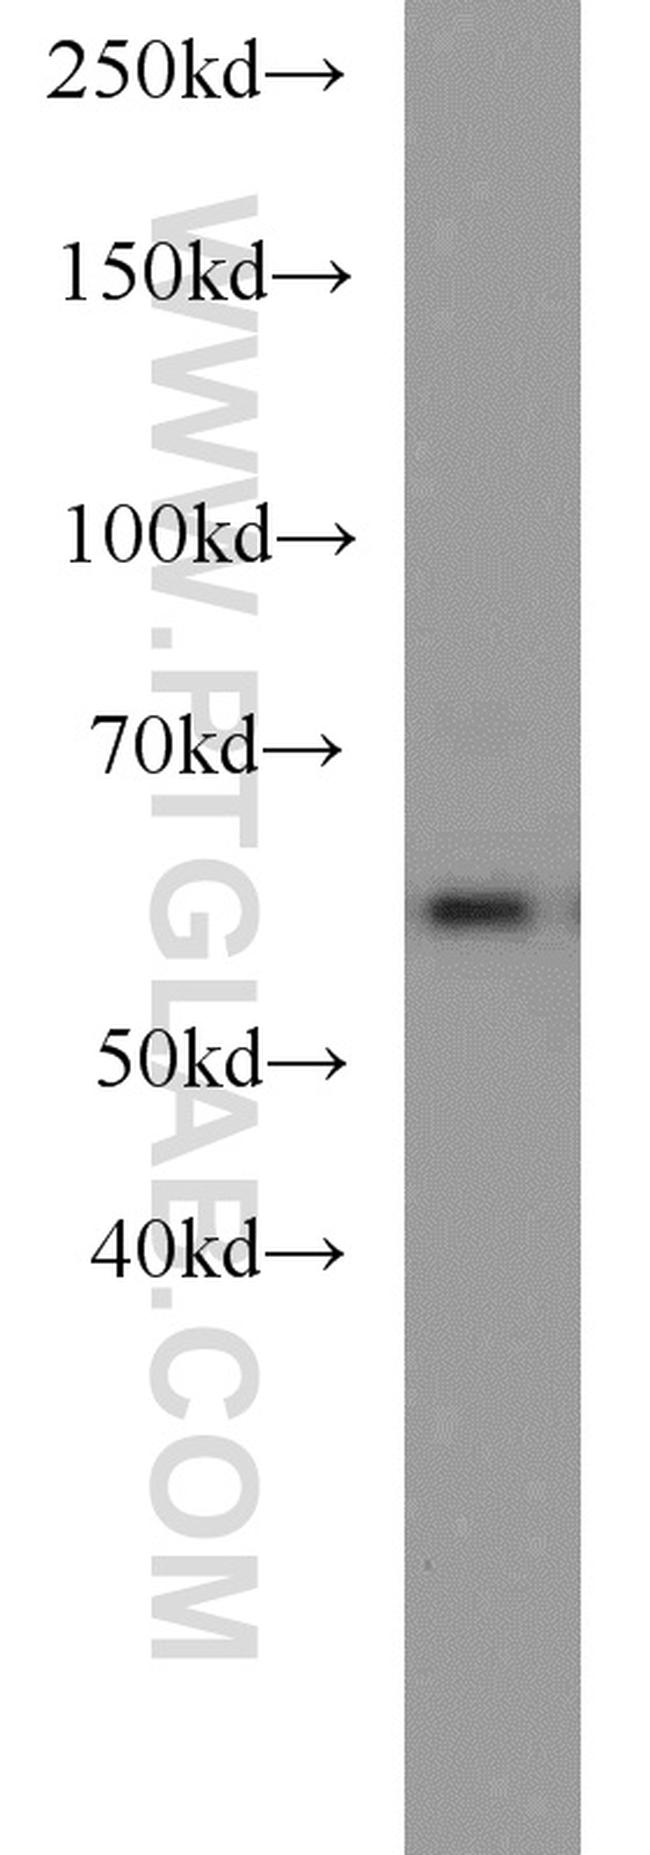 Sestrin 2 Antibody in Western Blot (WB)